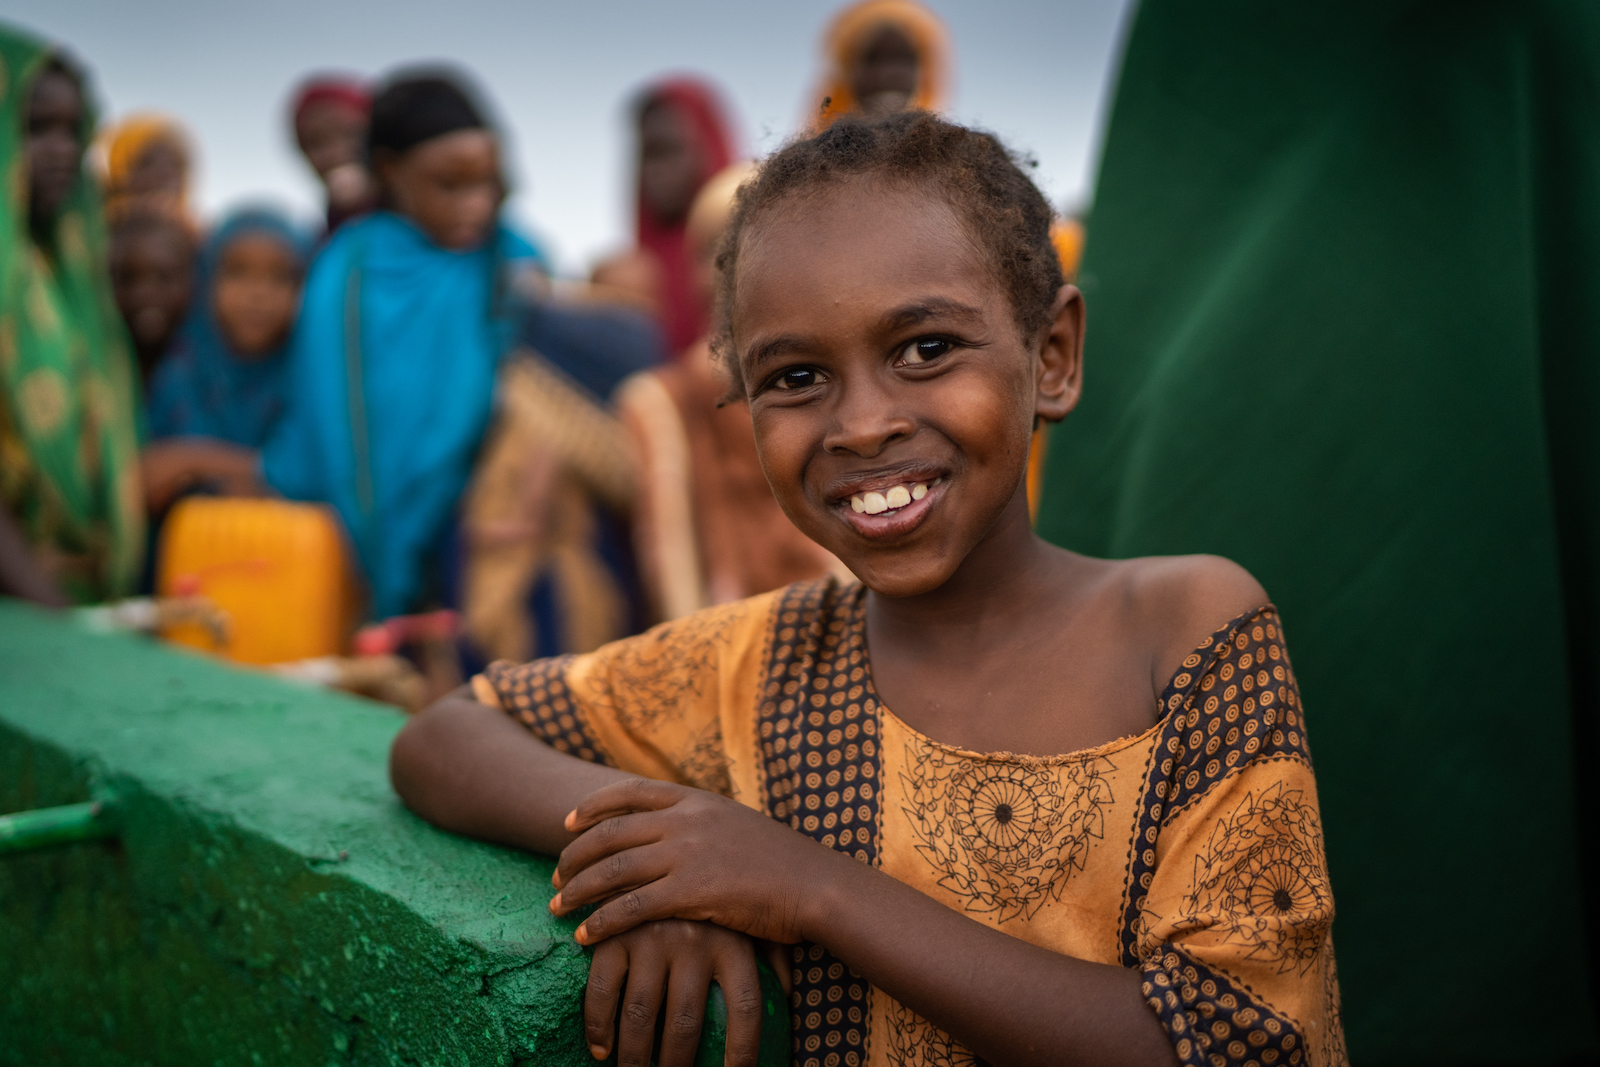 A young Somali girl in Baidoa, Somalia